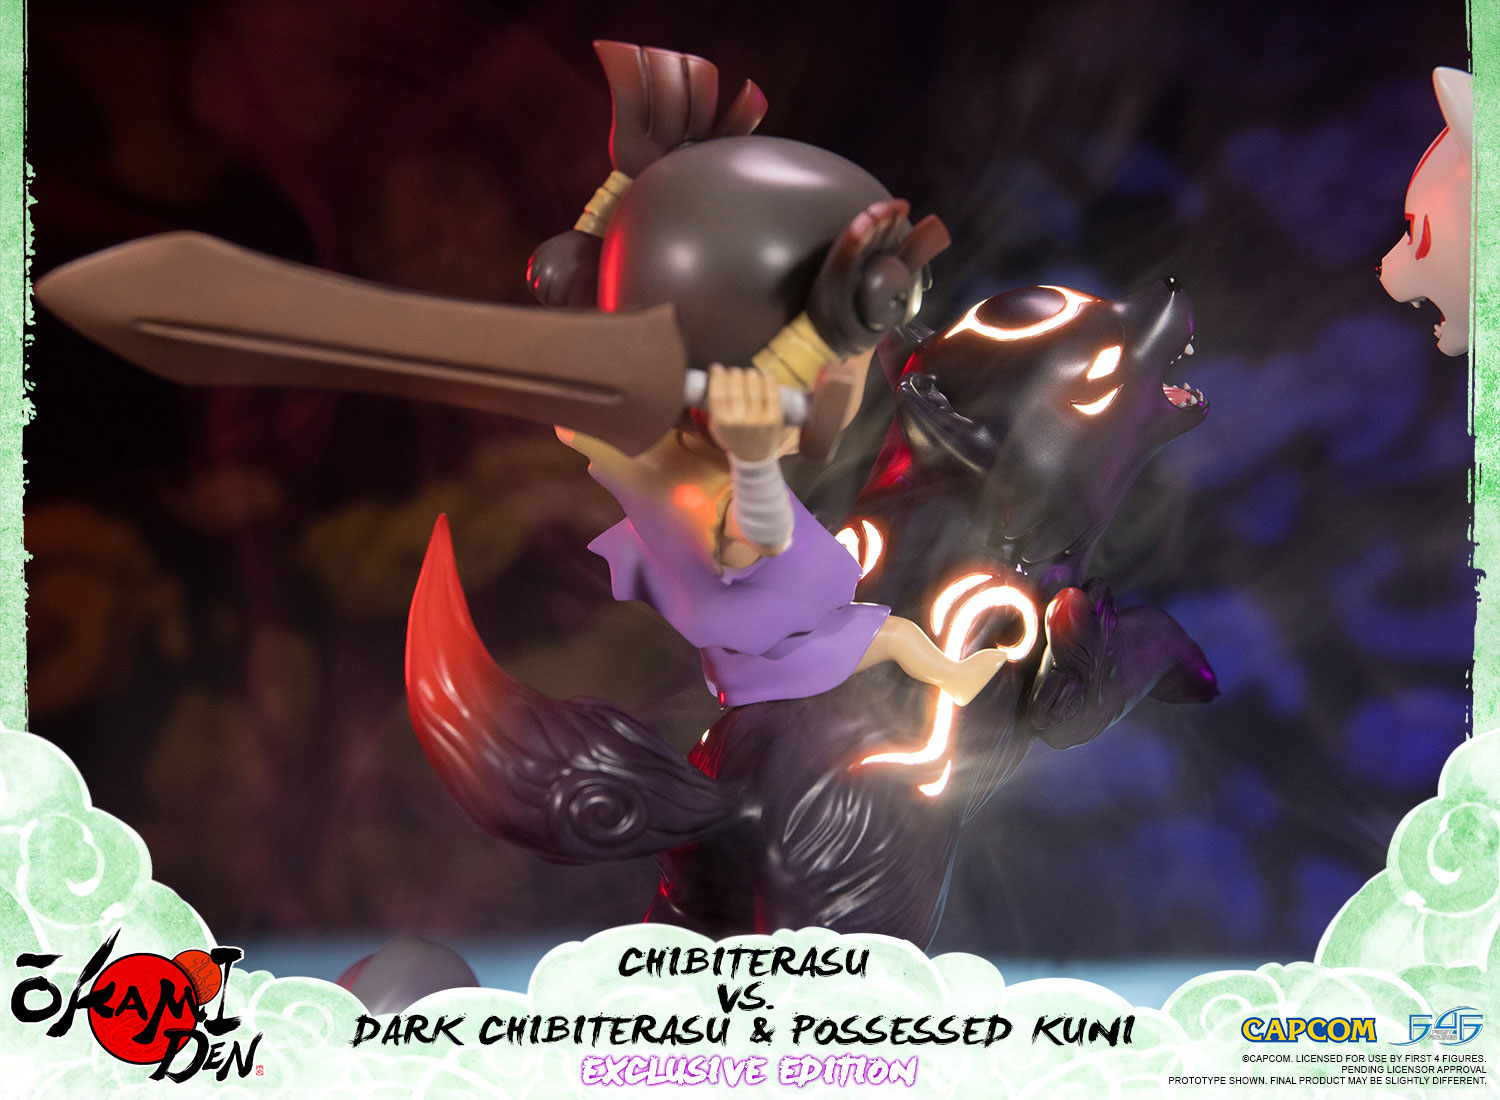 Chibiterasu vs. Dark Chibiterasu & Possessed Kuni (Exclusive Edition)